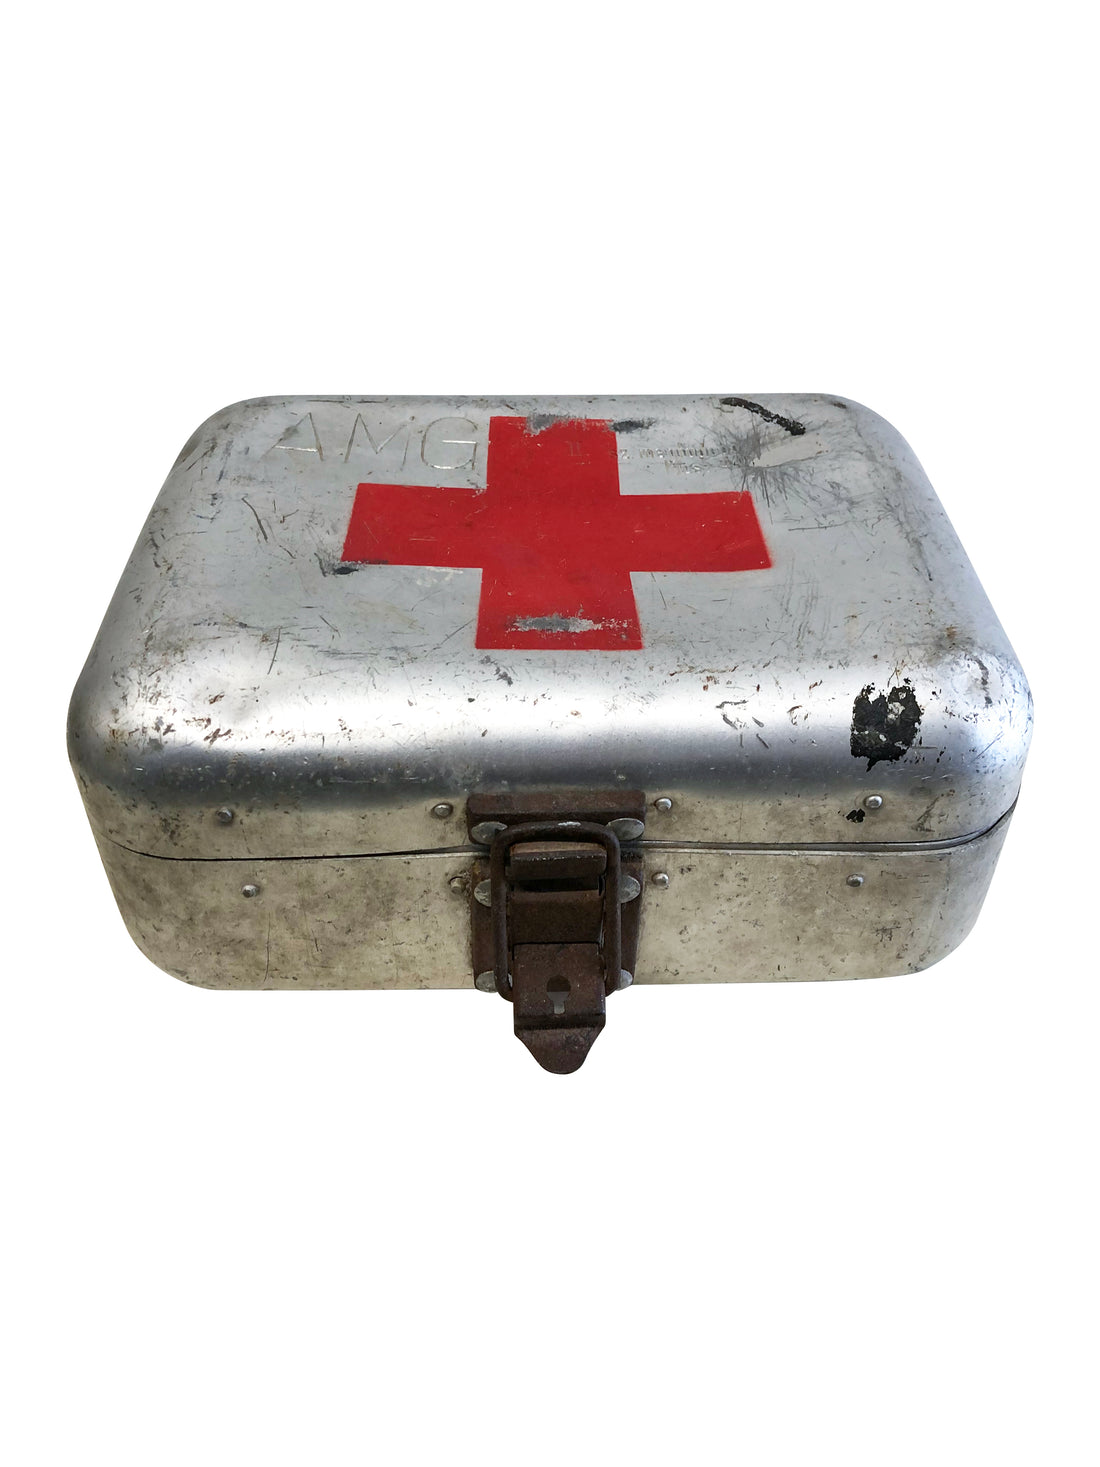 Metal First Aid Box